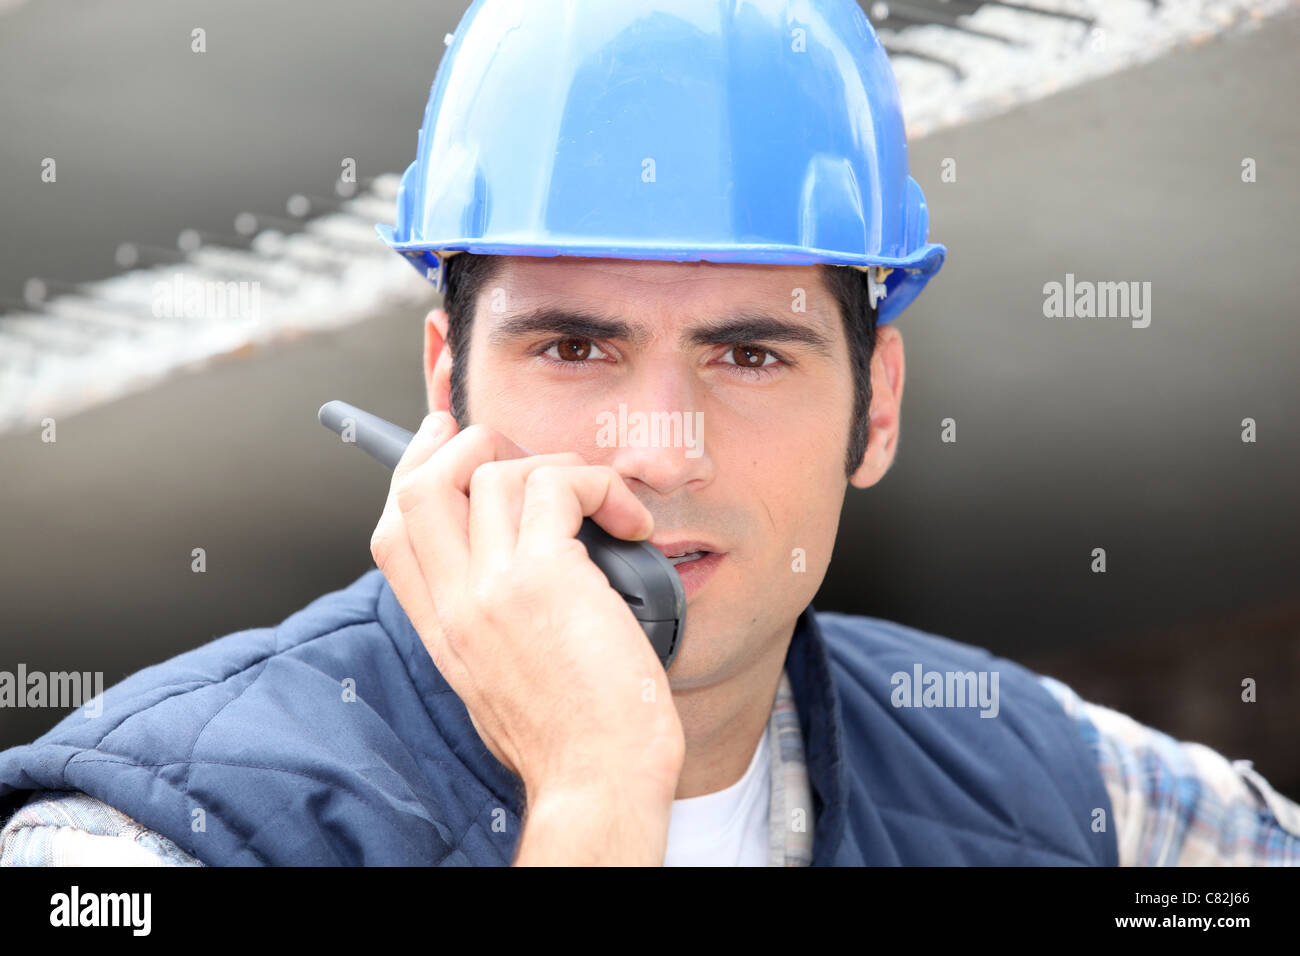 Builder on walkie talkie Stock Photo